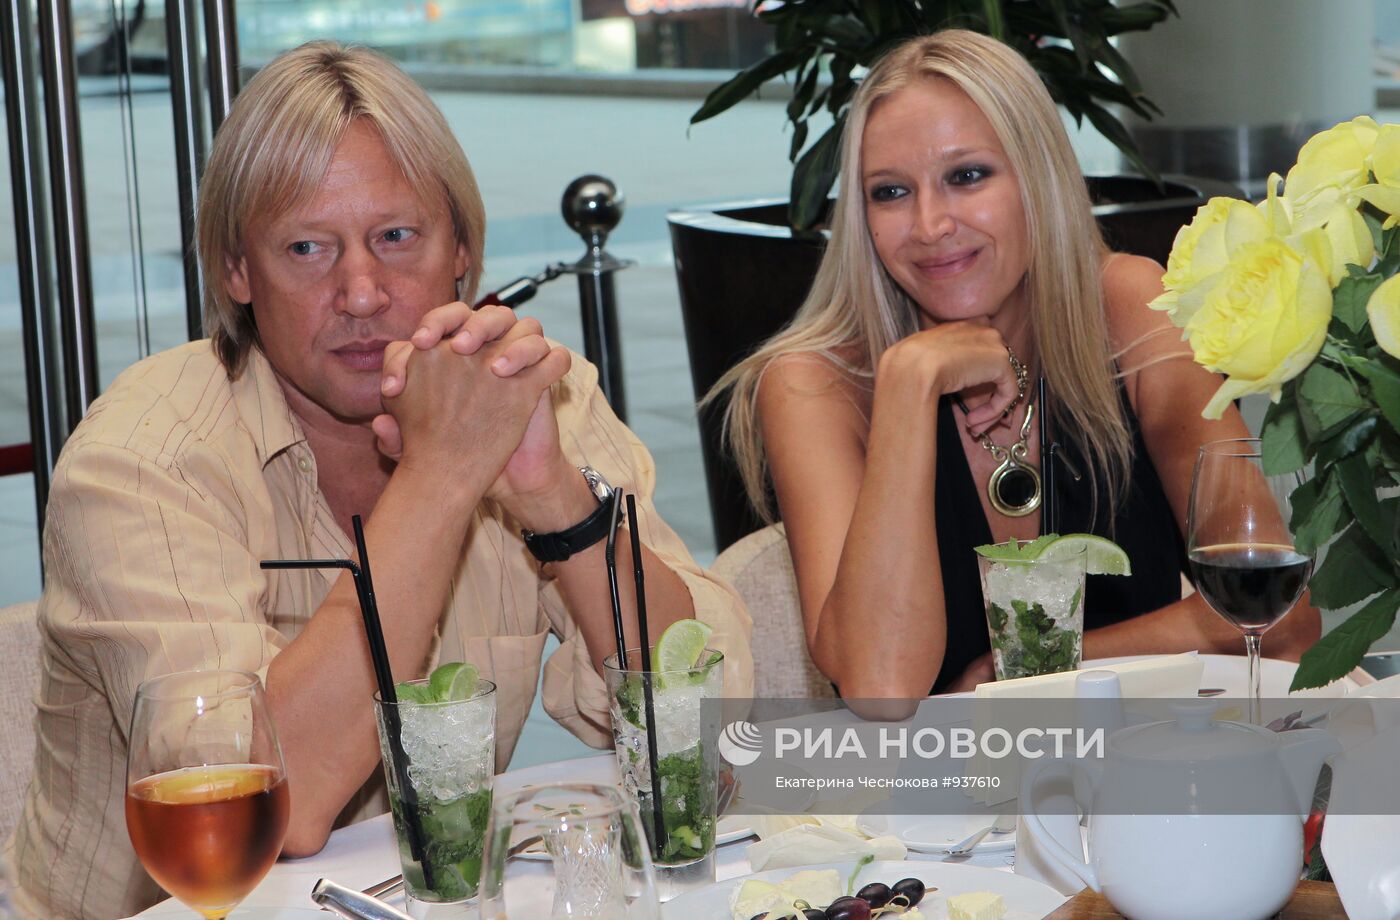 Дмитрий Харатьян c супругой Мариной Майко